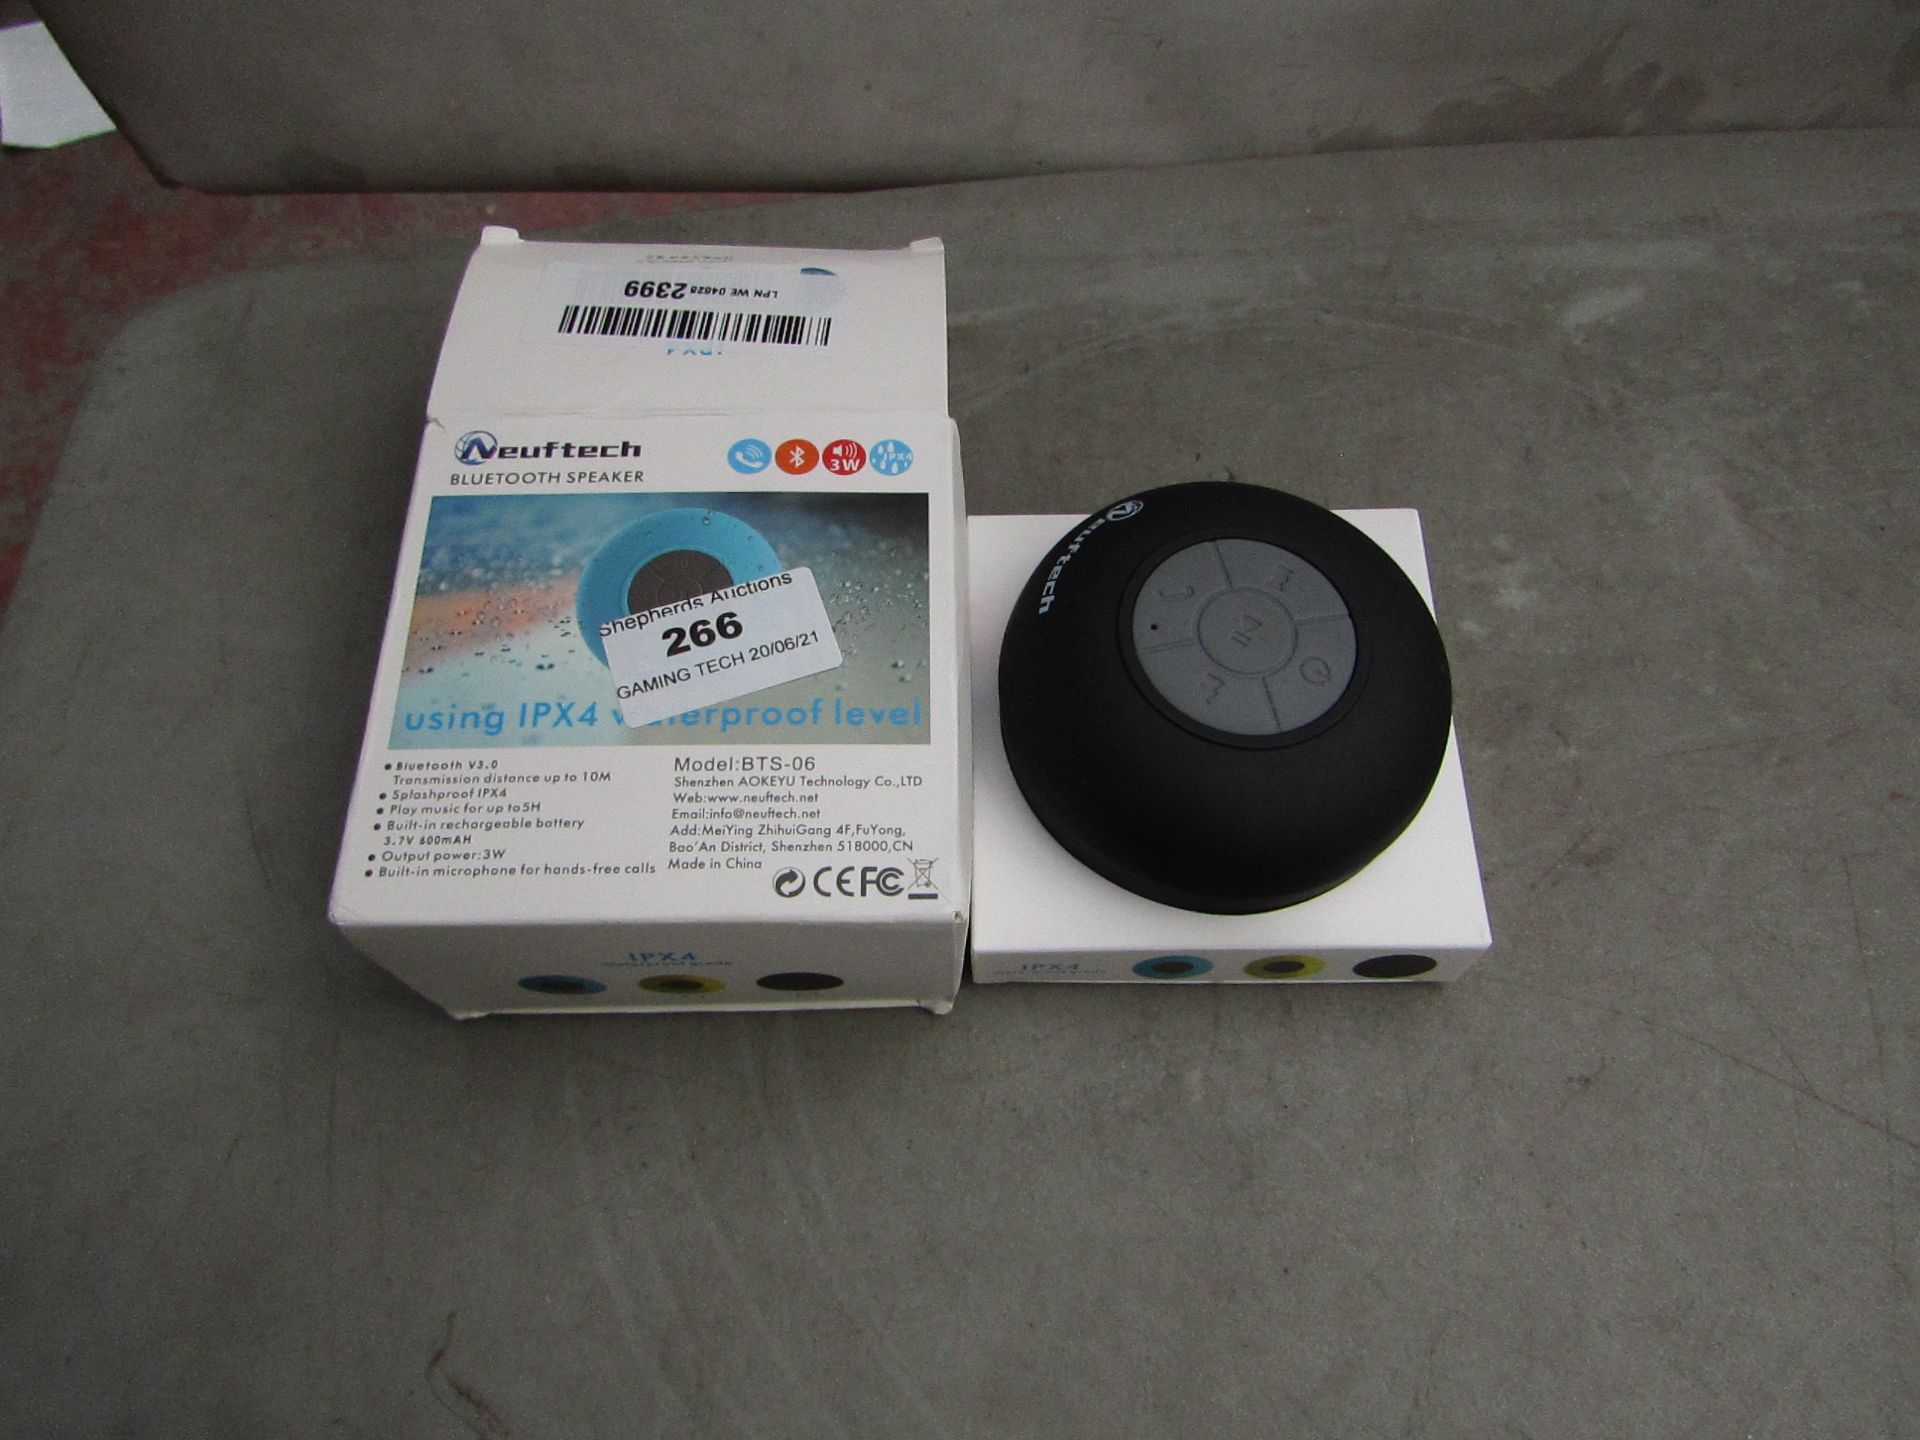 Neuftech - IPX4 Bluetooth Waterproof Speaker - Untested & Boxed.